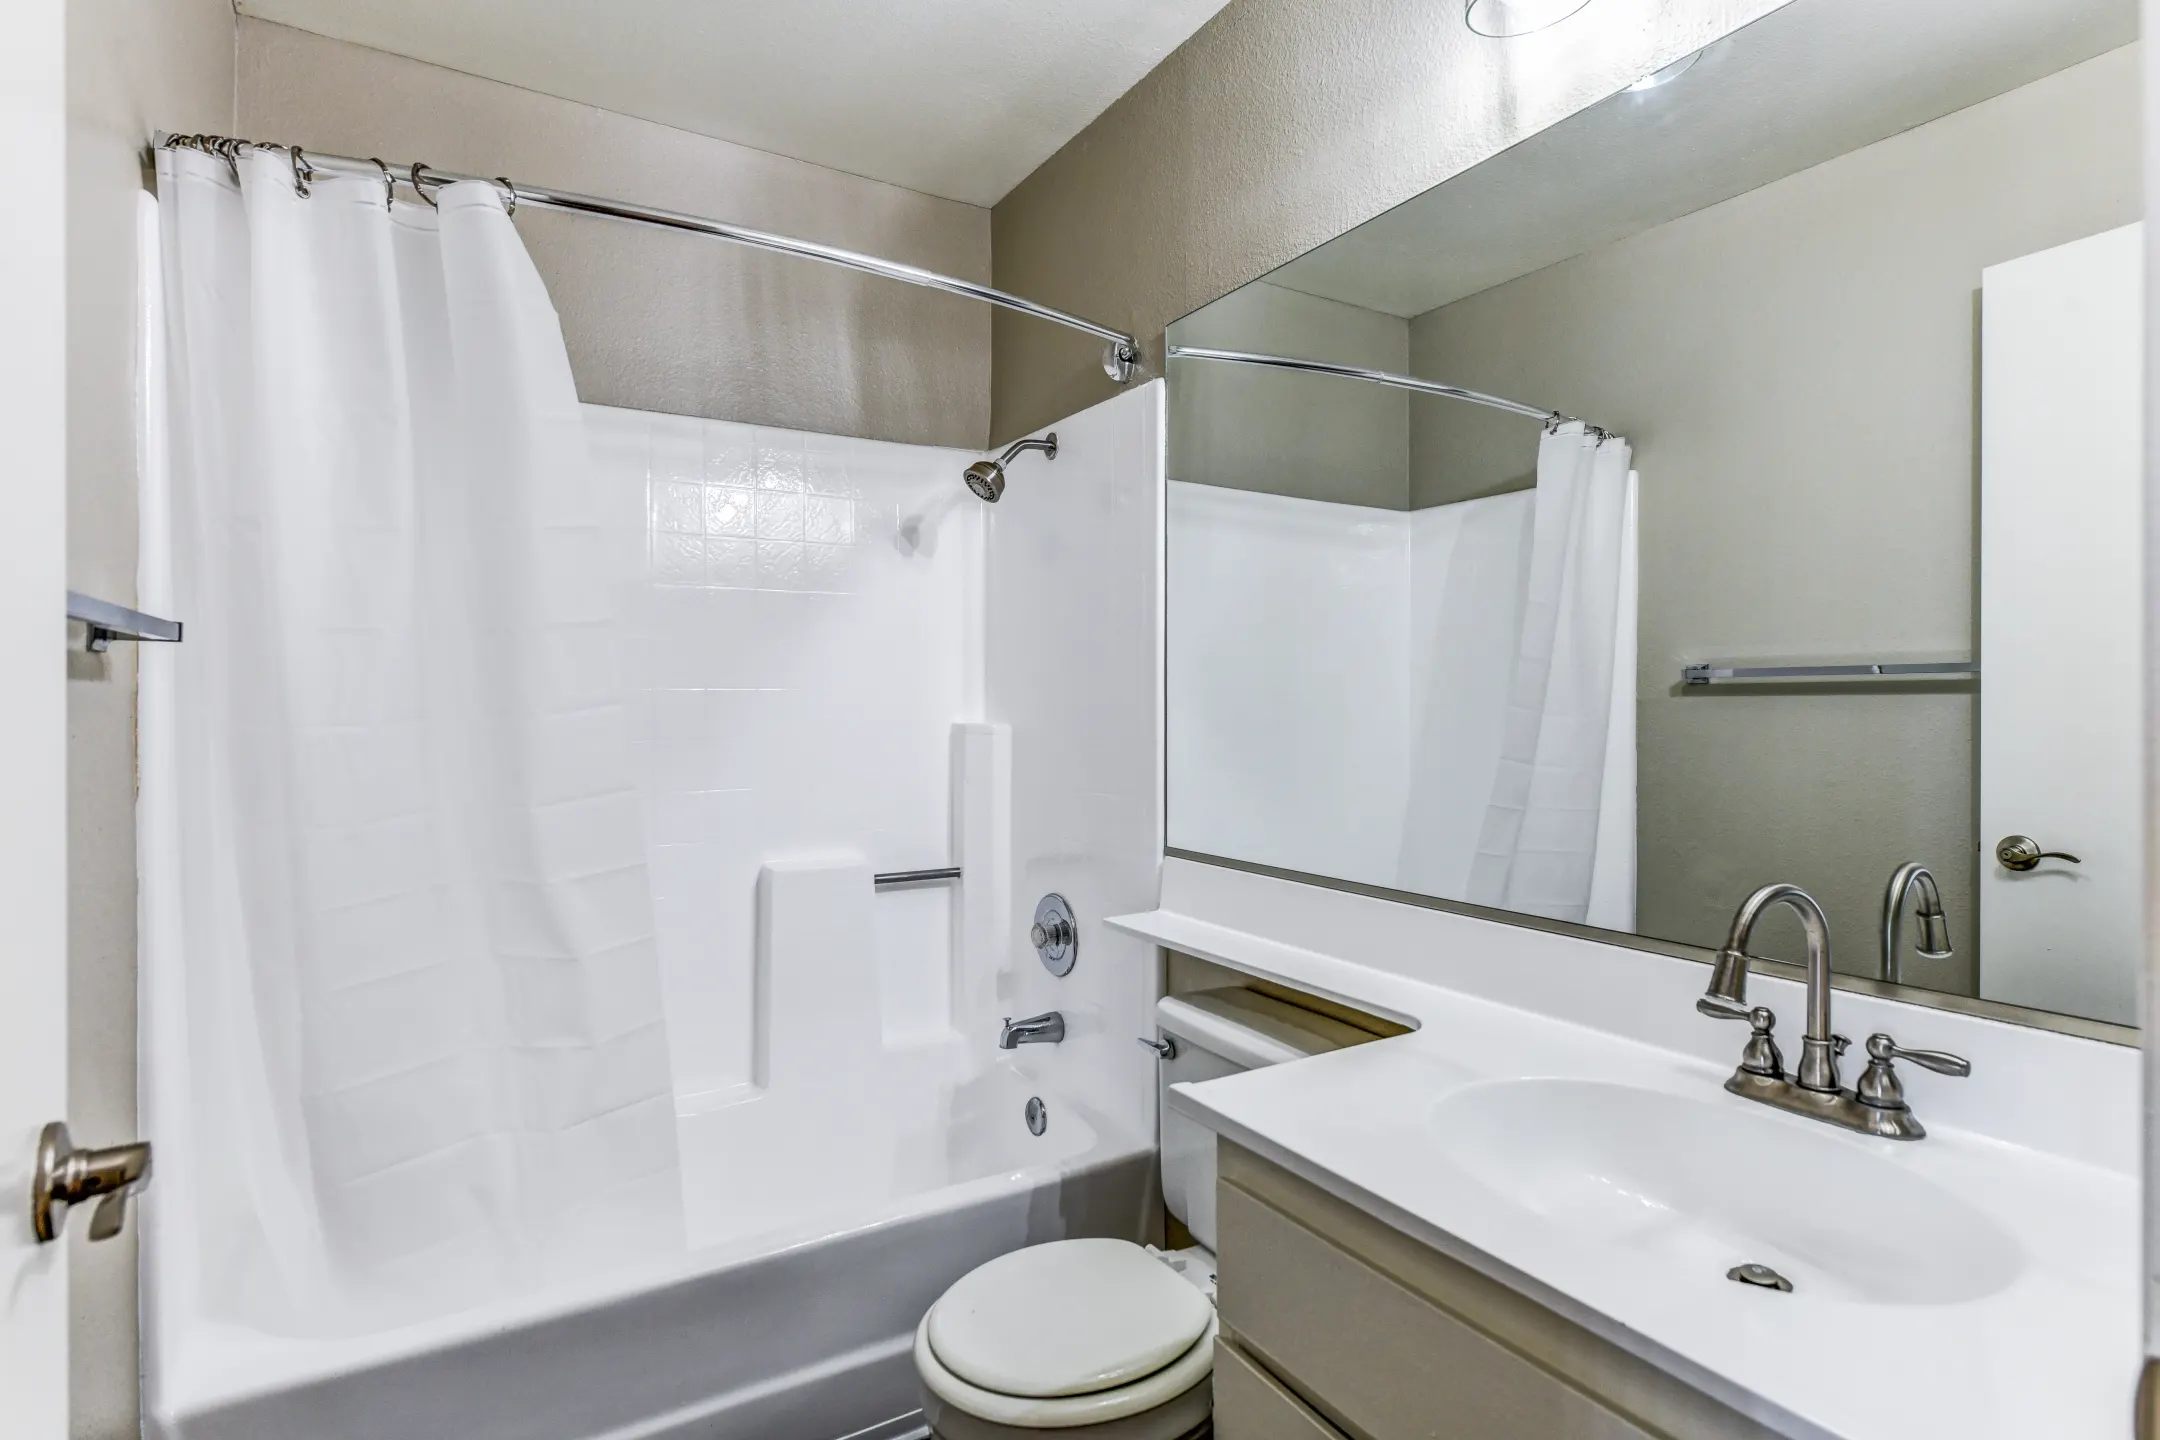 Bathroom - Portofino Apartments - Santa Ana, CA